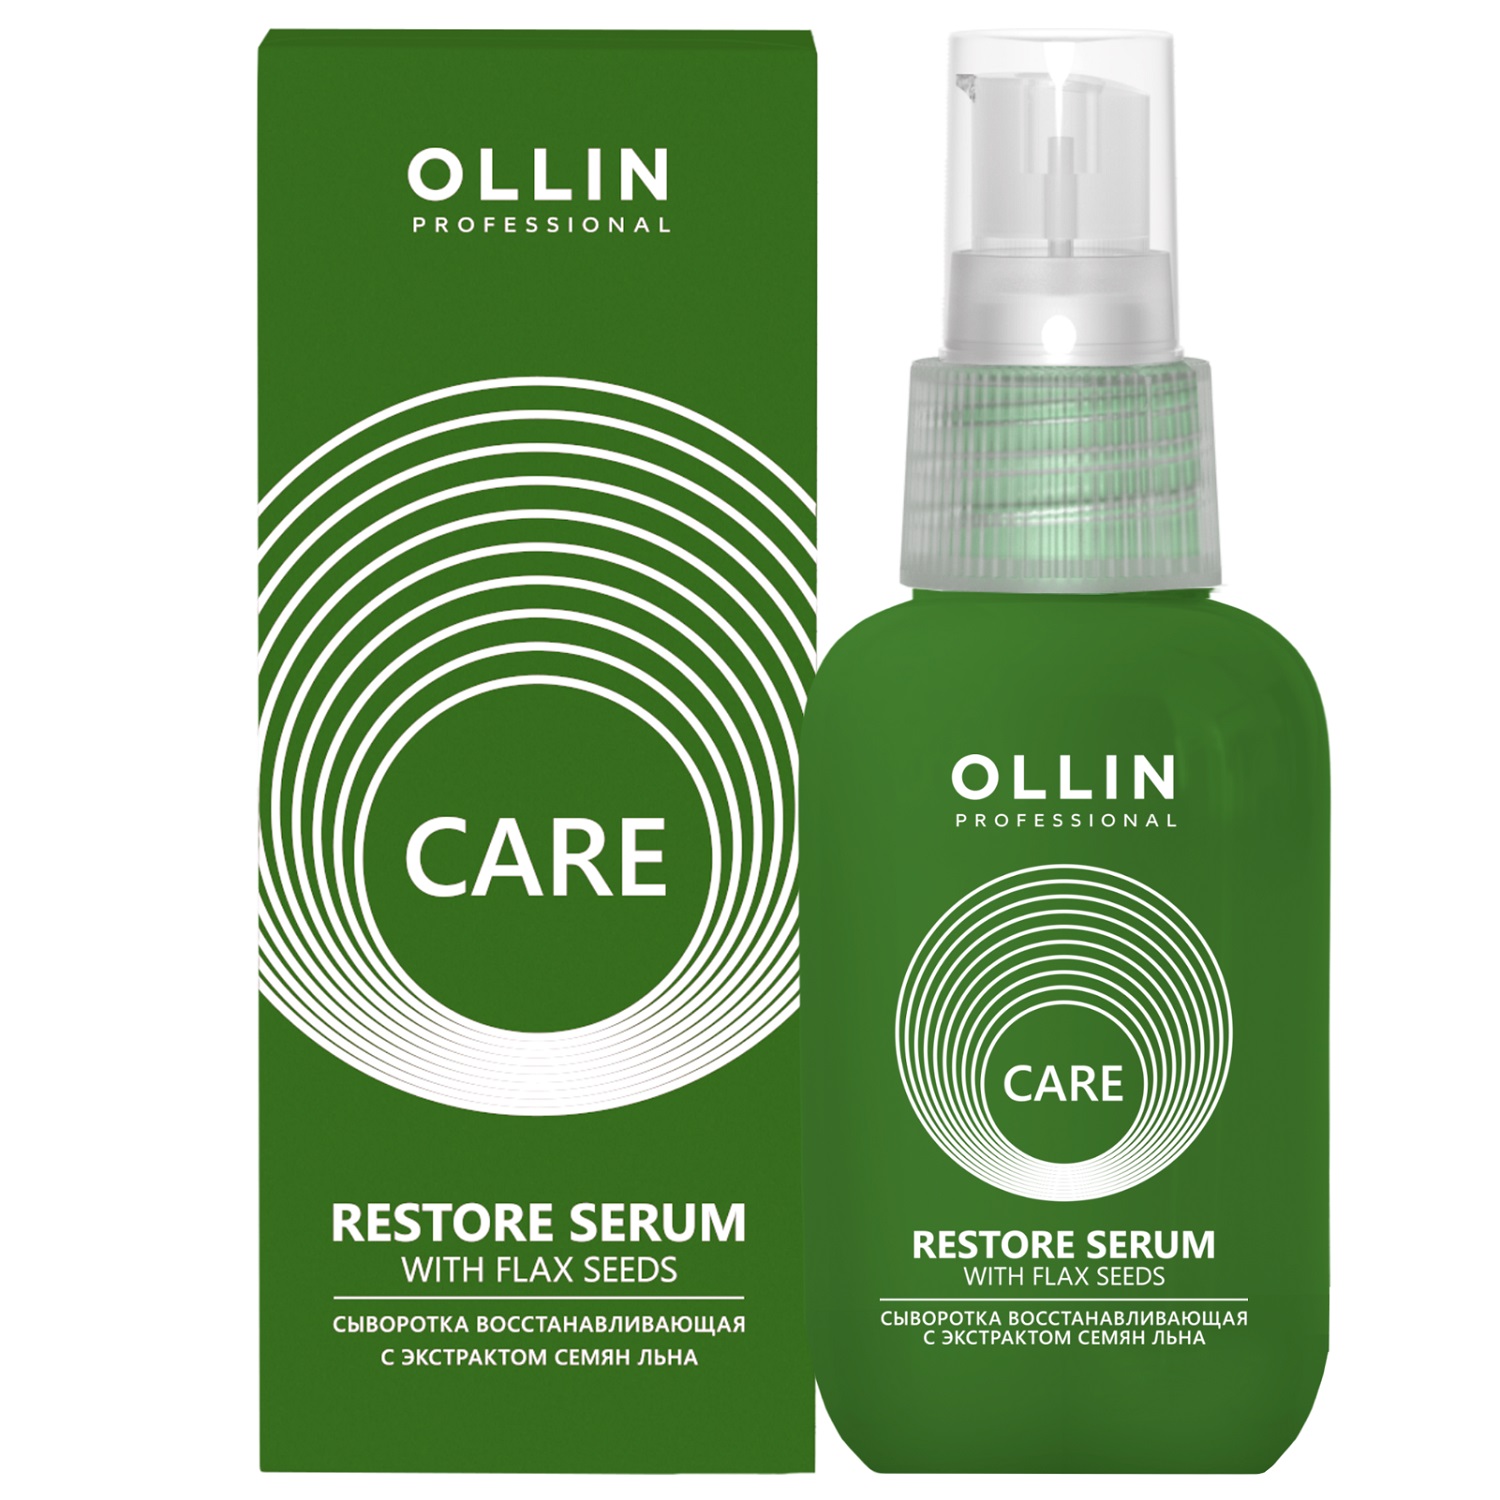 Ollin Professional Восстанавливающая сыворотка с экстрактом семян льна, 50 мл (Ollin Professional, Care)